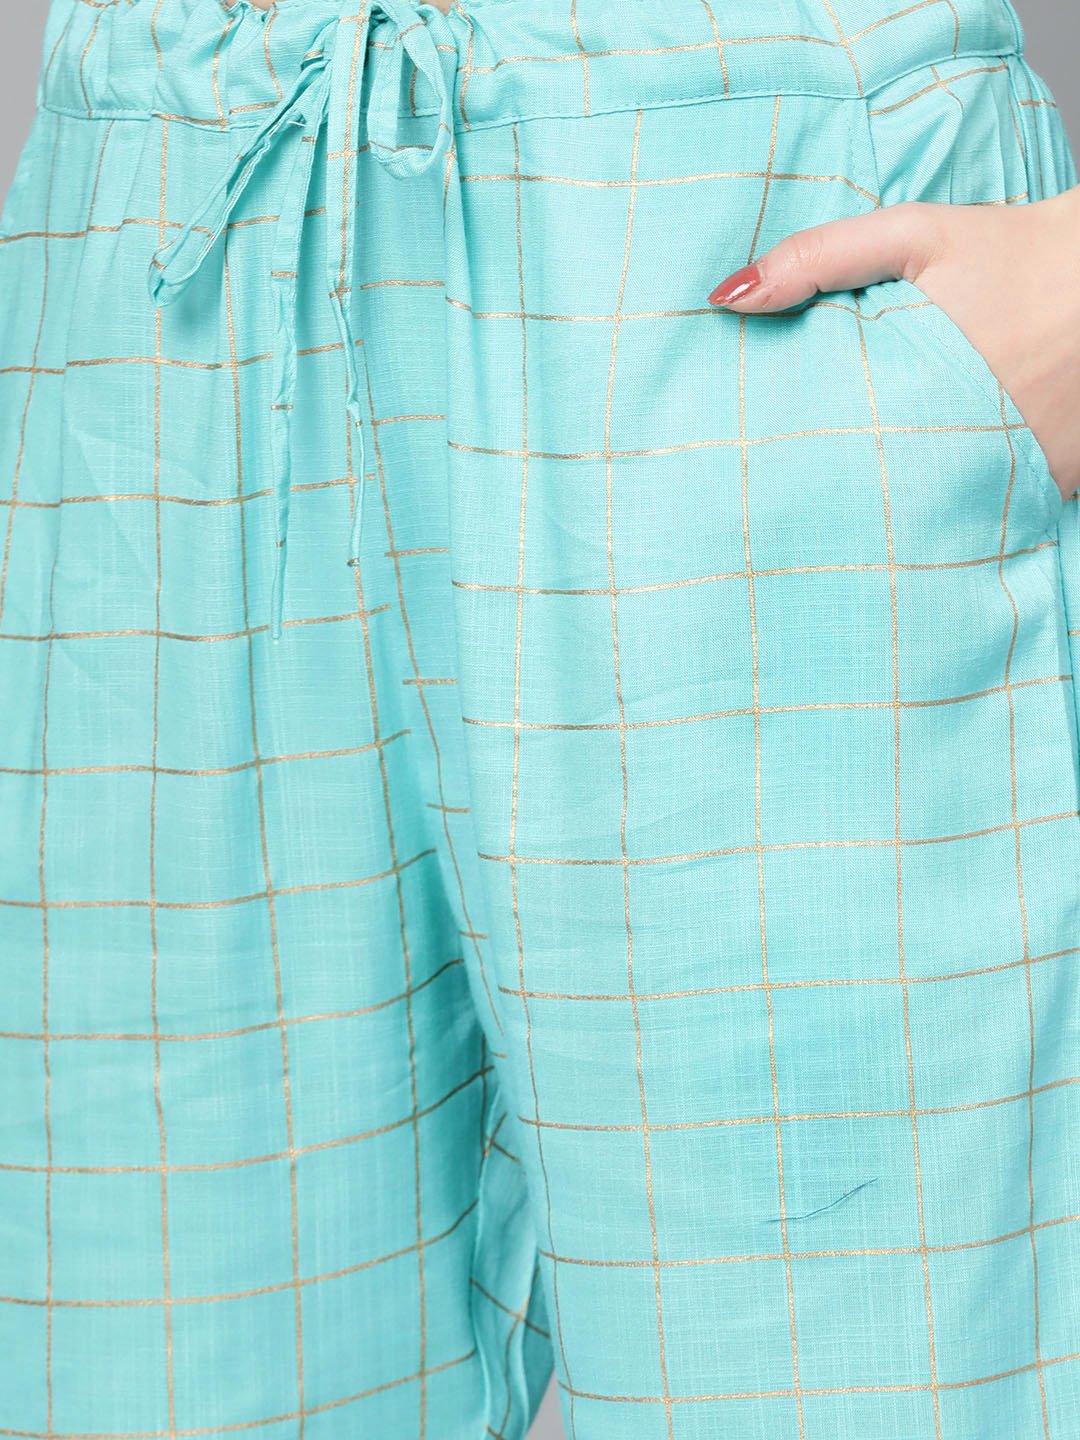 Ishin Women's Cotton Blue Foil Printed A-Line Kurta Trouser Set